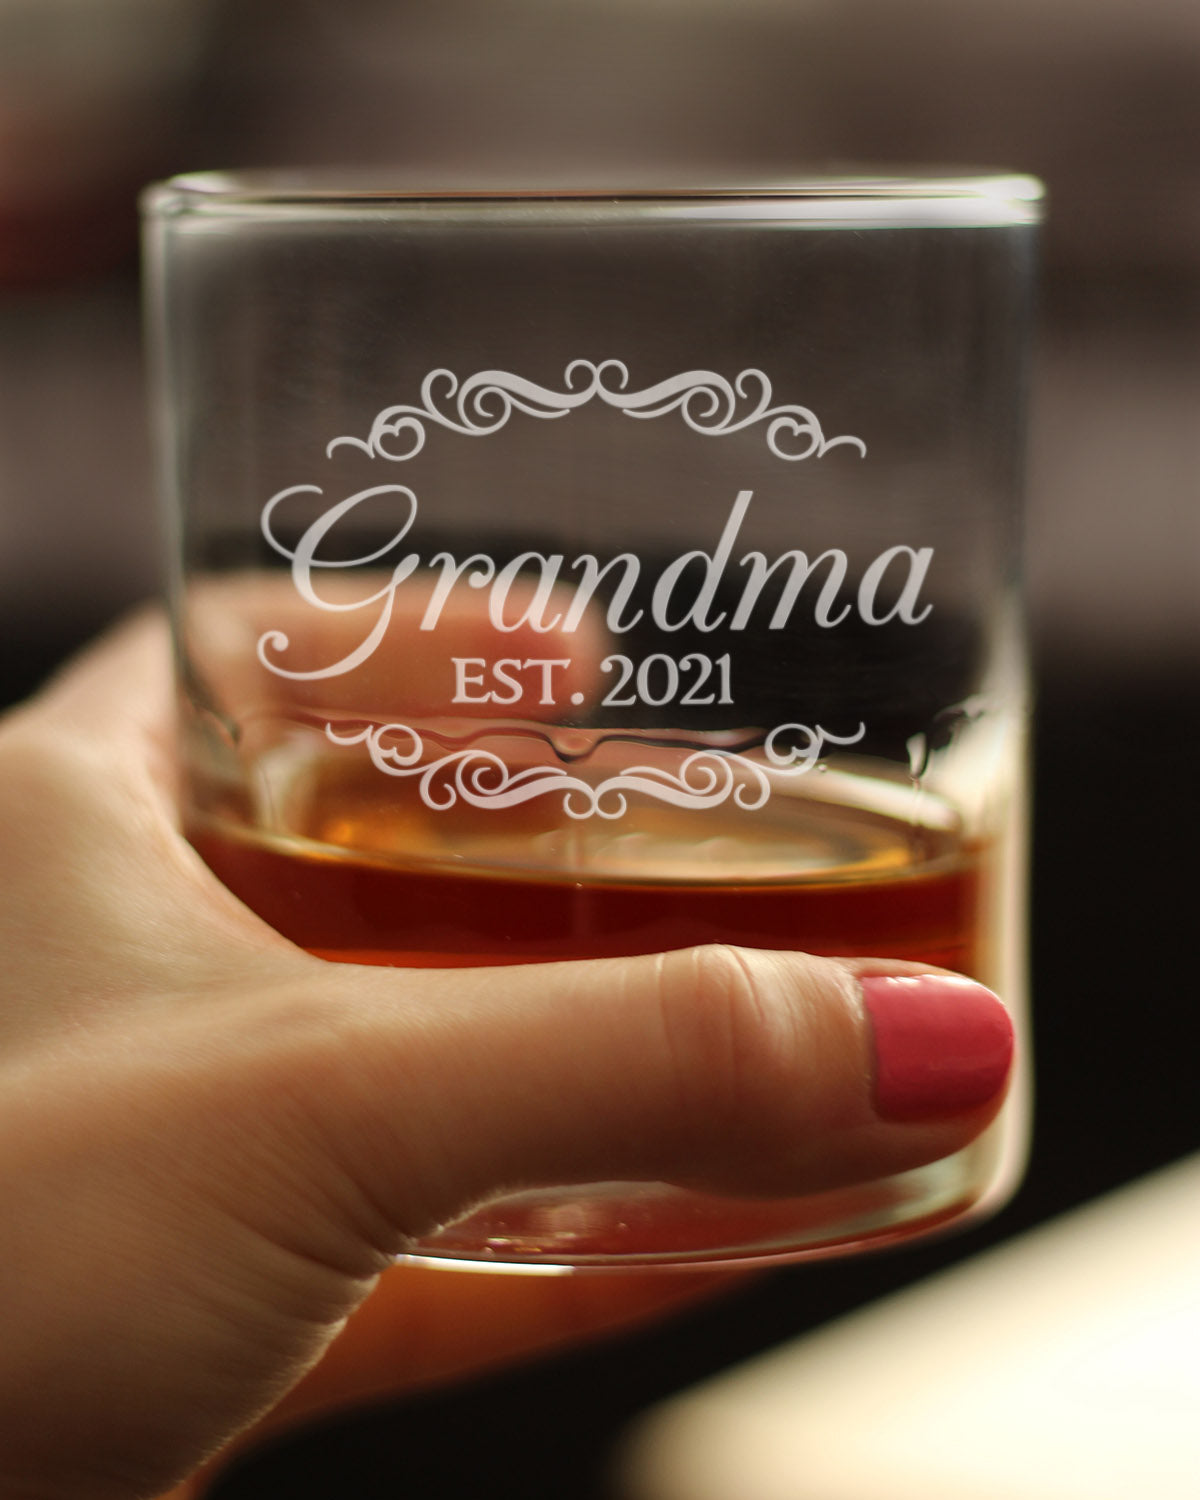 Grandma Est 2021 - New Grandmother Whiskey Rocks Glass Gift for First Time Grandparents - Decorative 10.25 Oz Glasses